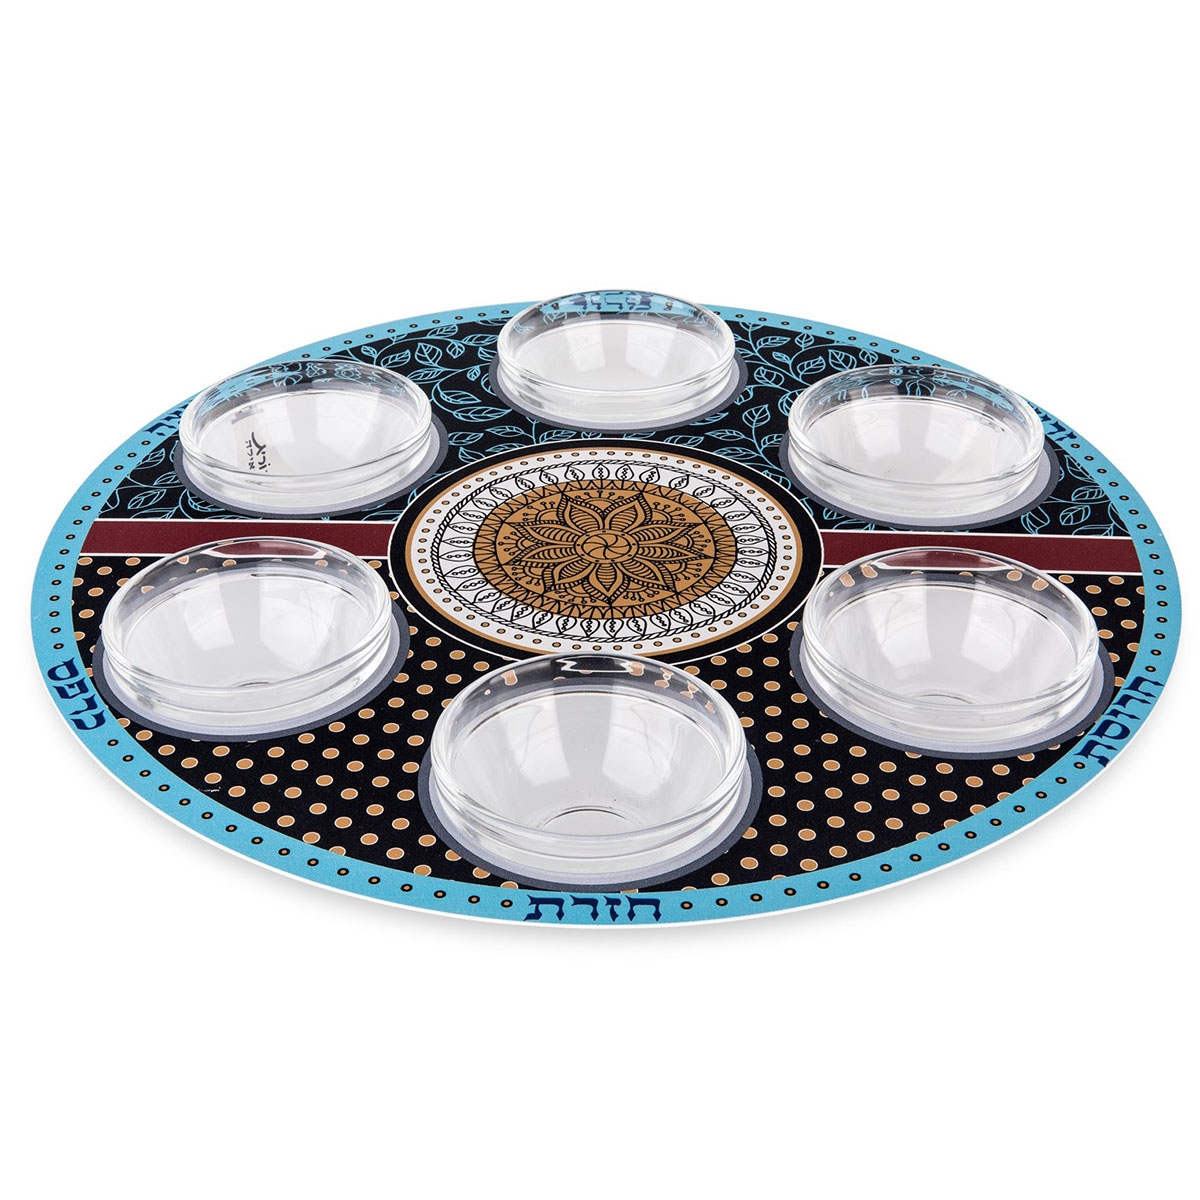 Designer Seder Plate With Floral & Polka Dot Design By Dorit Judaica (With 6 Glass Bowls) - 1